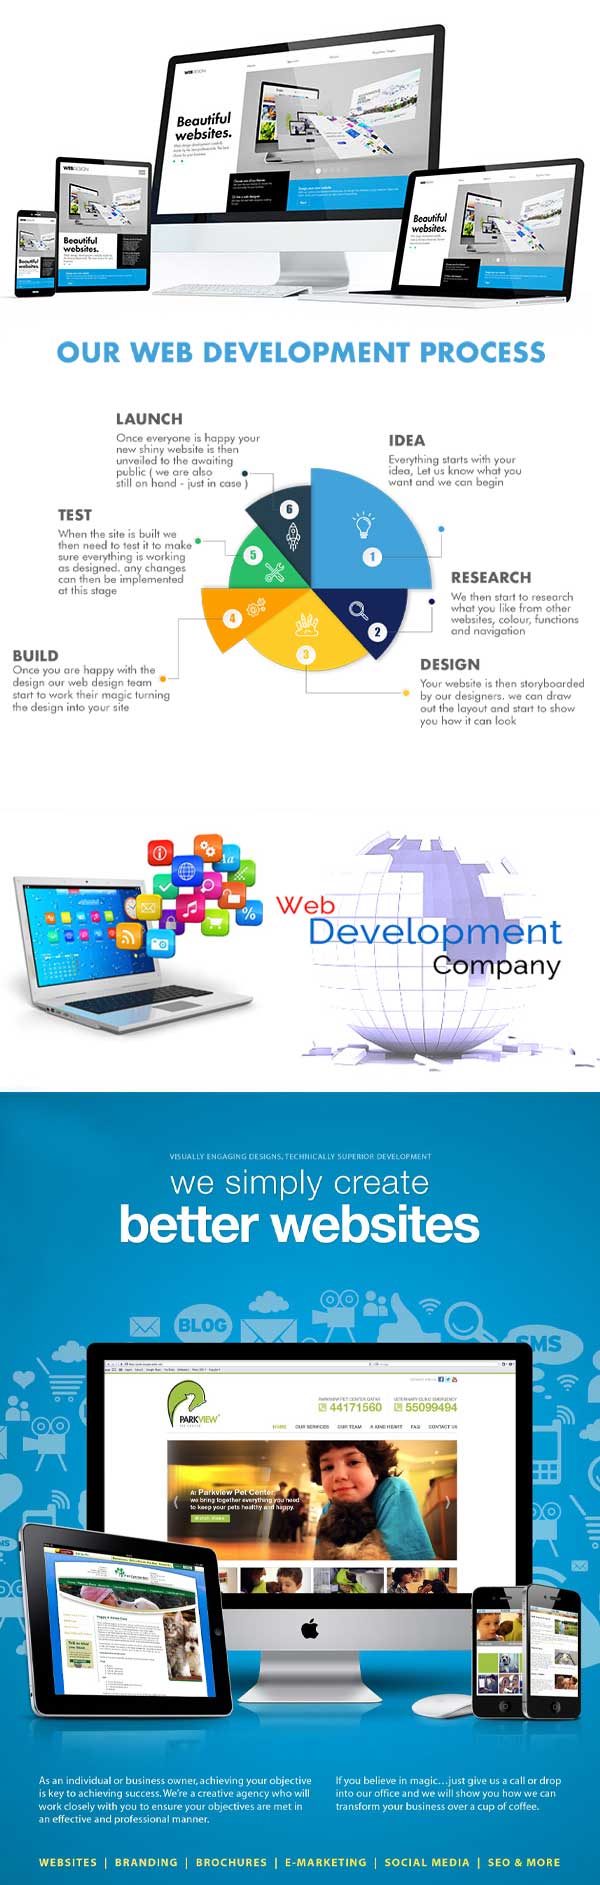 website-design-services-company-in-doha-qatar